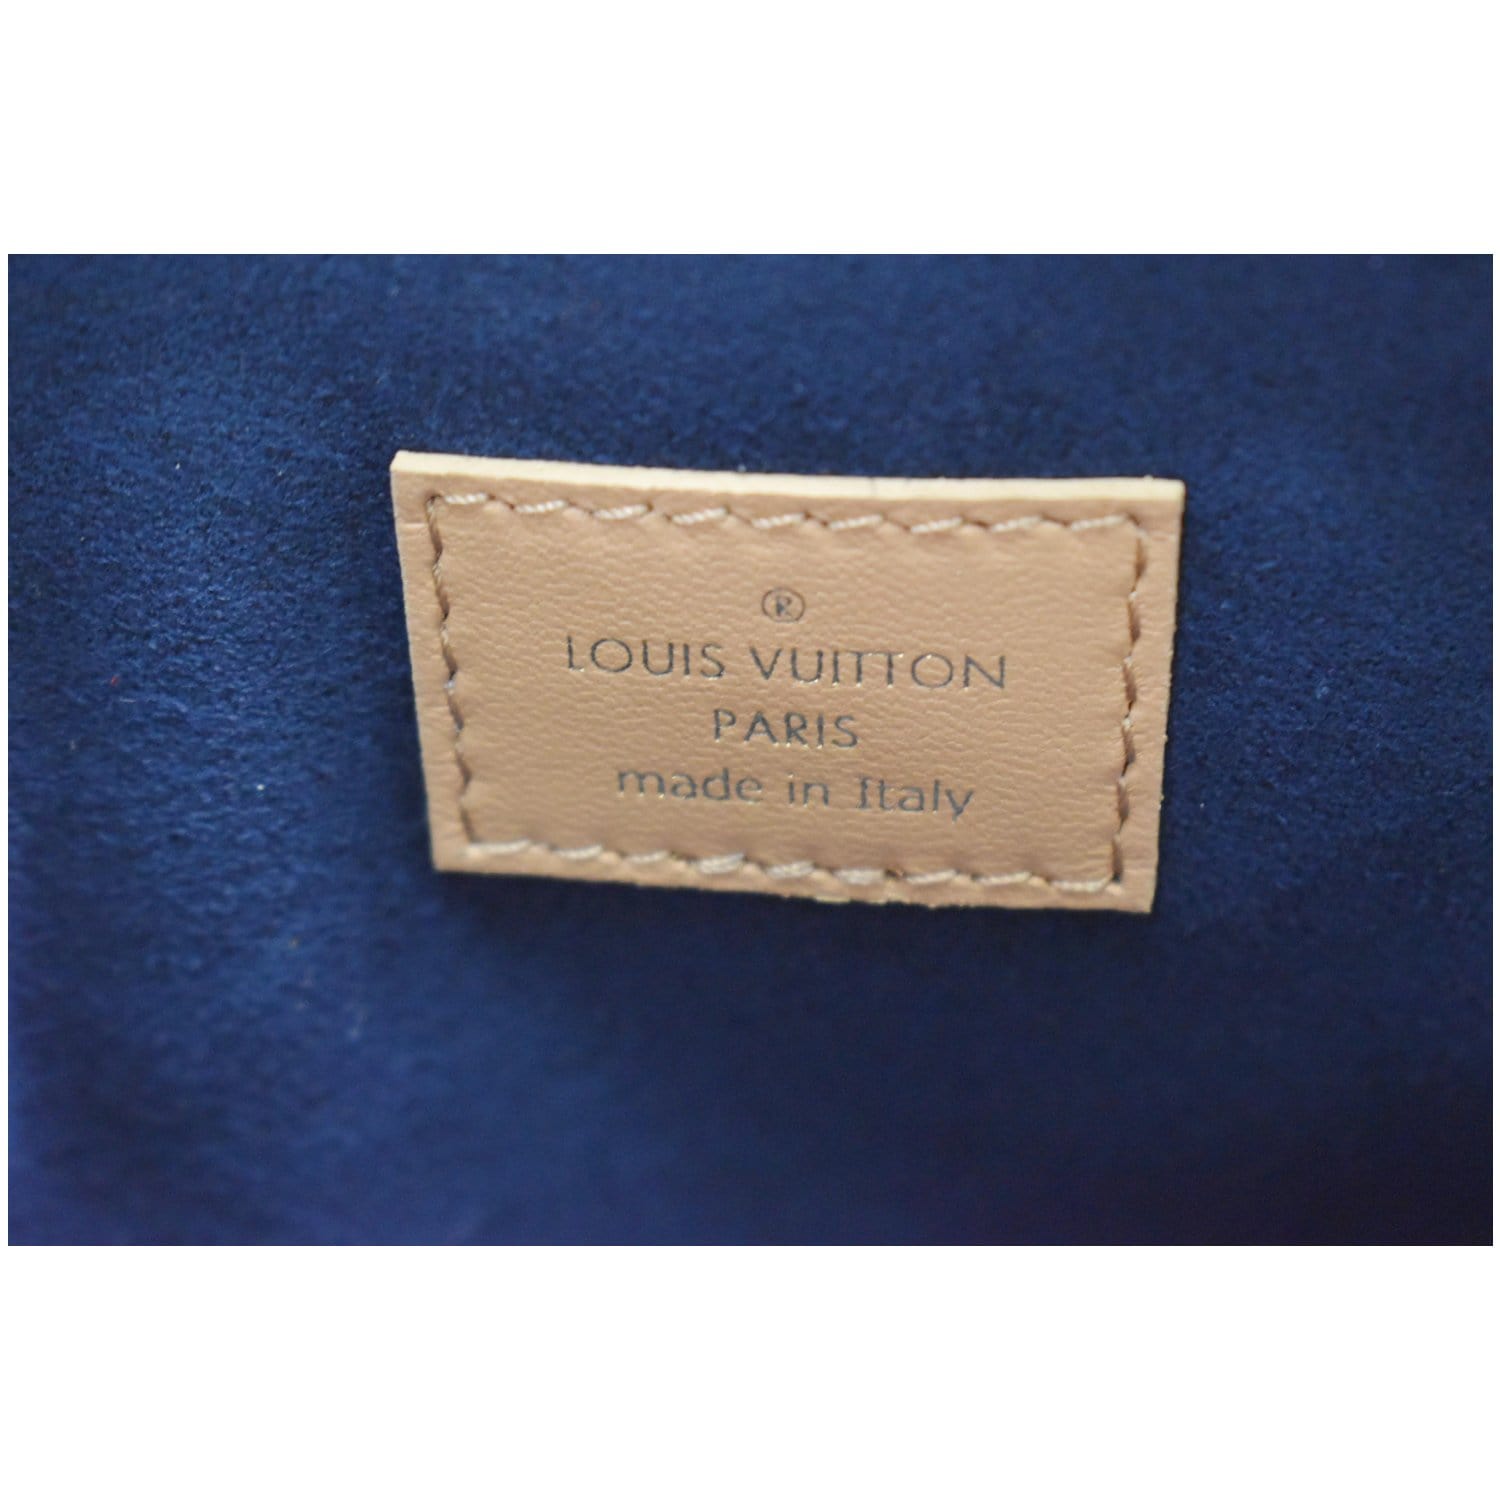 Louis Vuitton Mini Coussins, Camel, New in Box